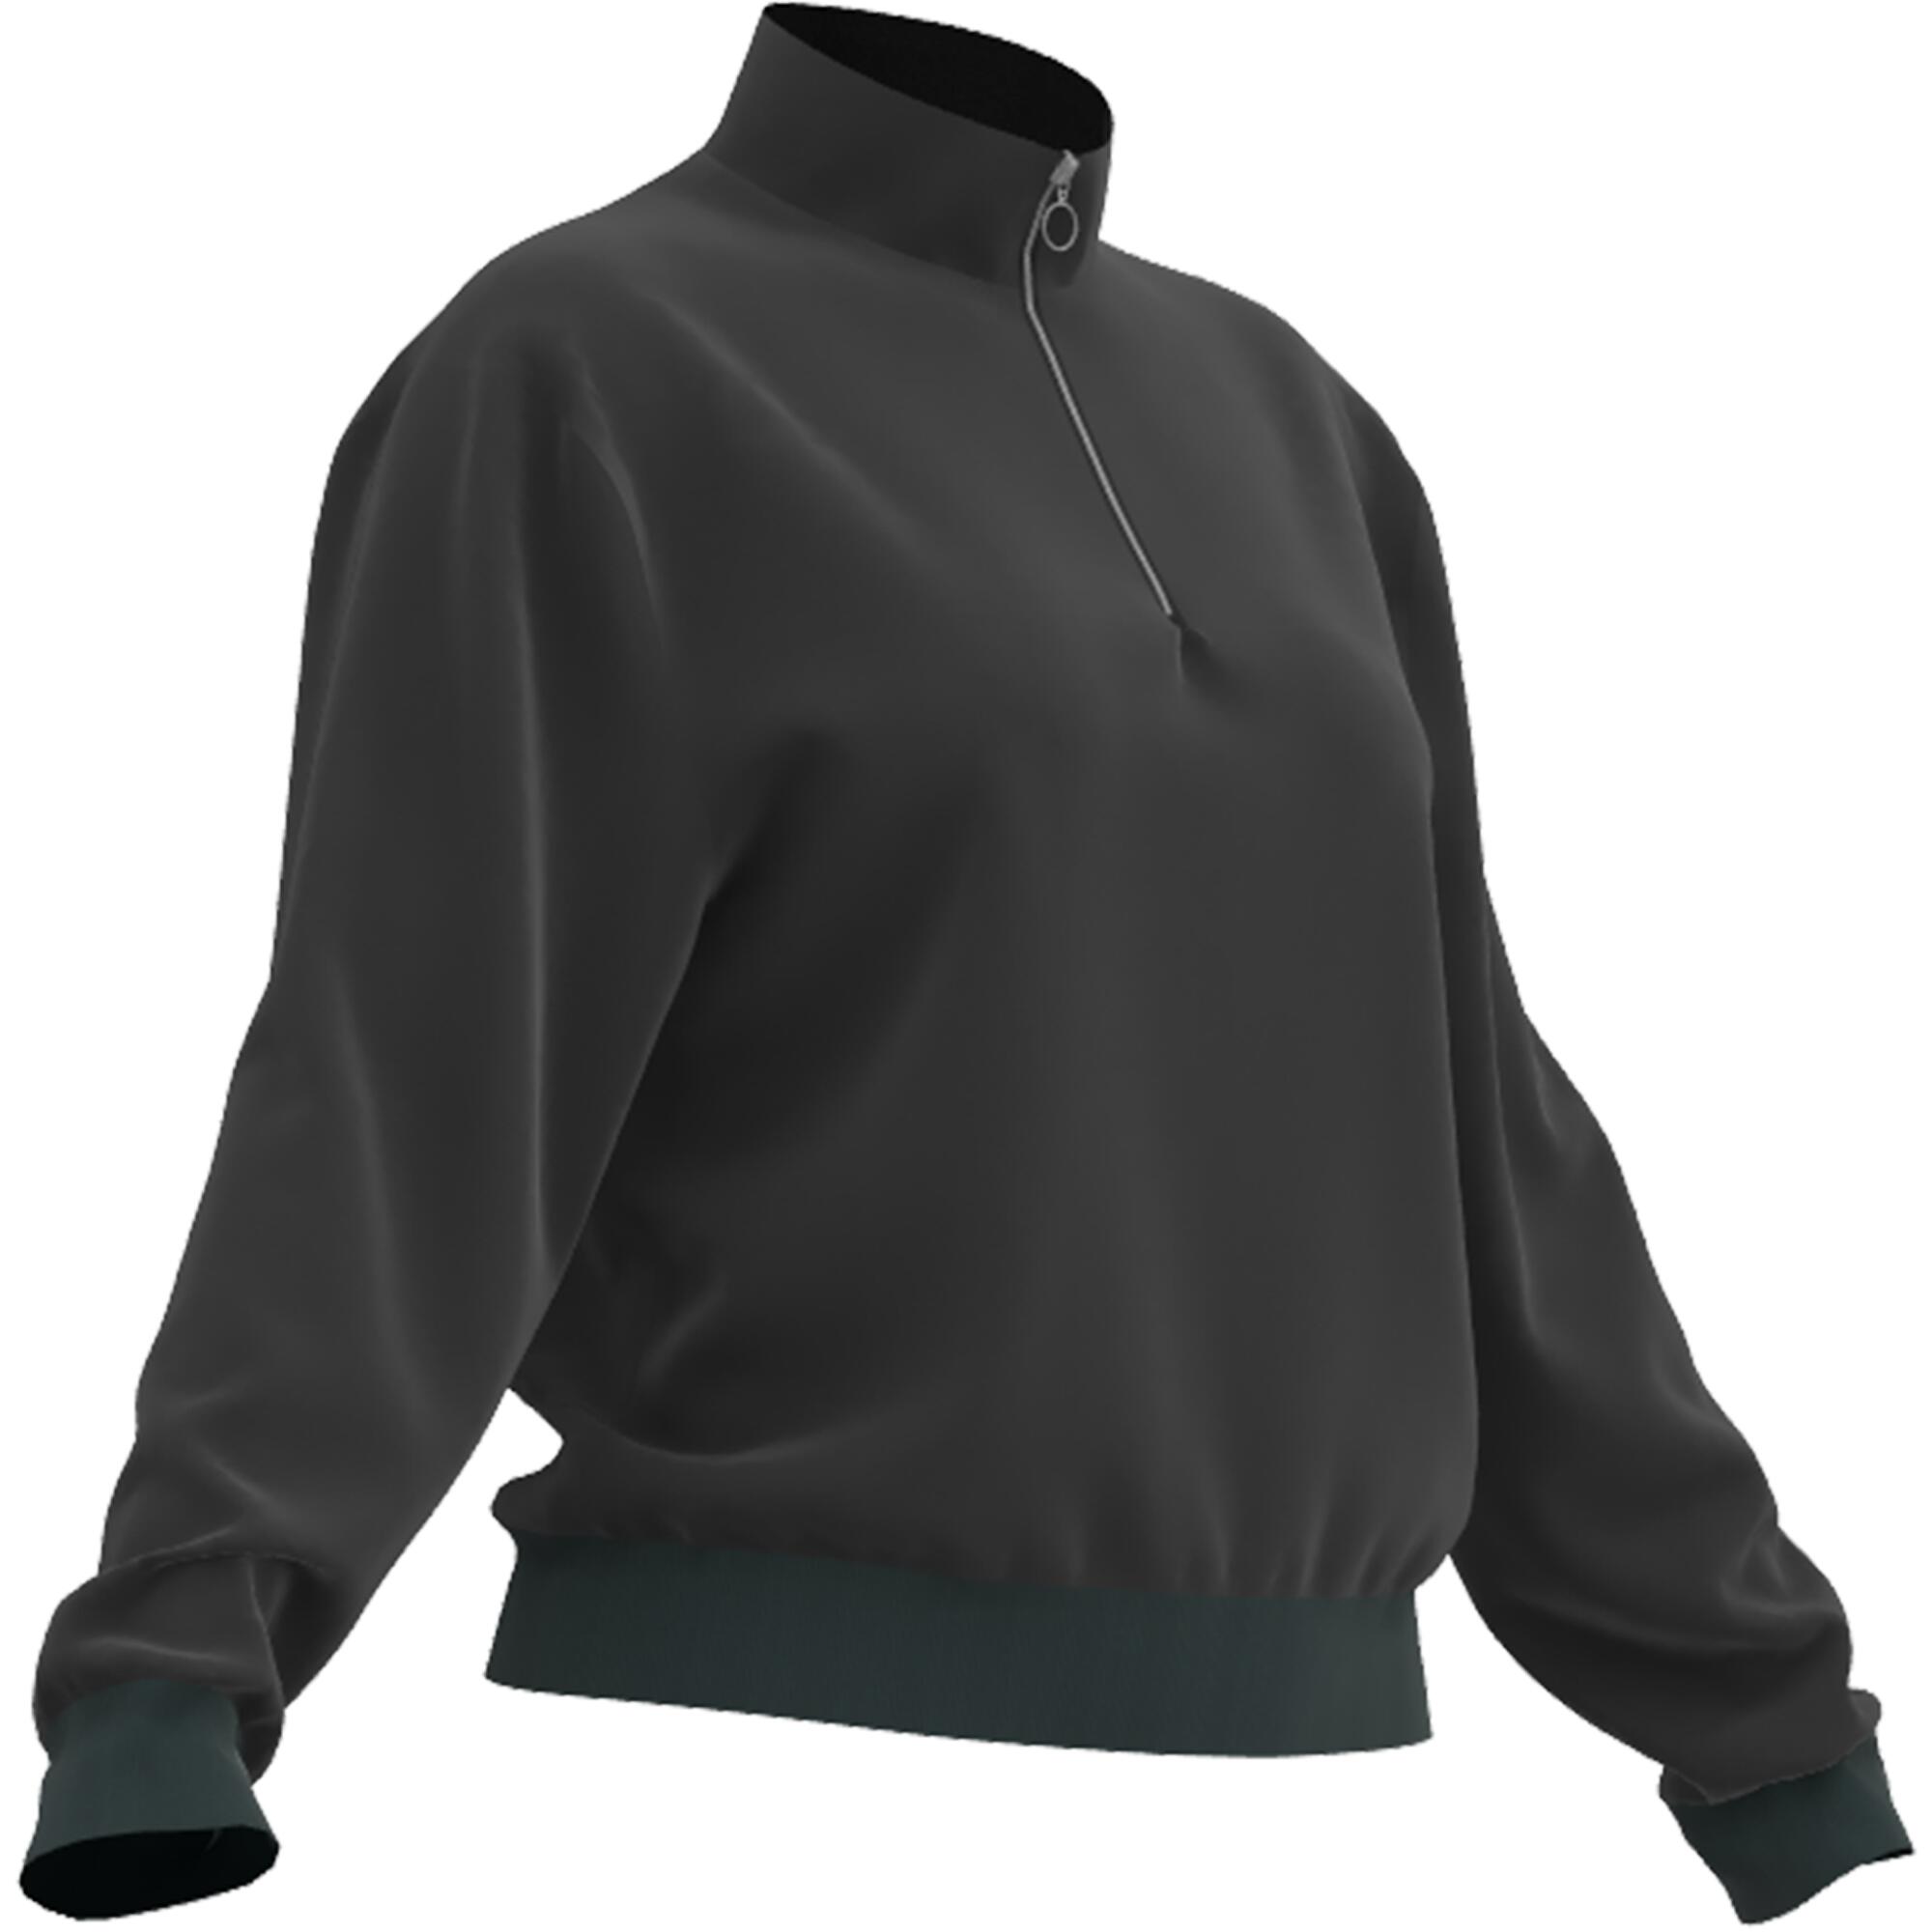 DOMYOS Women's Quarter-Zip Long-Sleeved Fitness Cardio Sweatshirt - Black